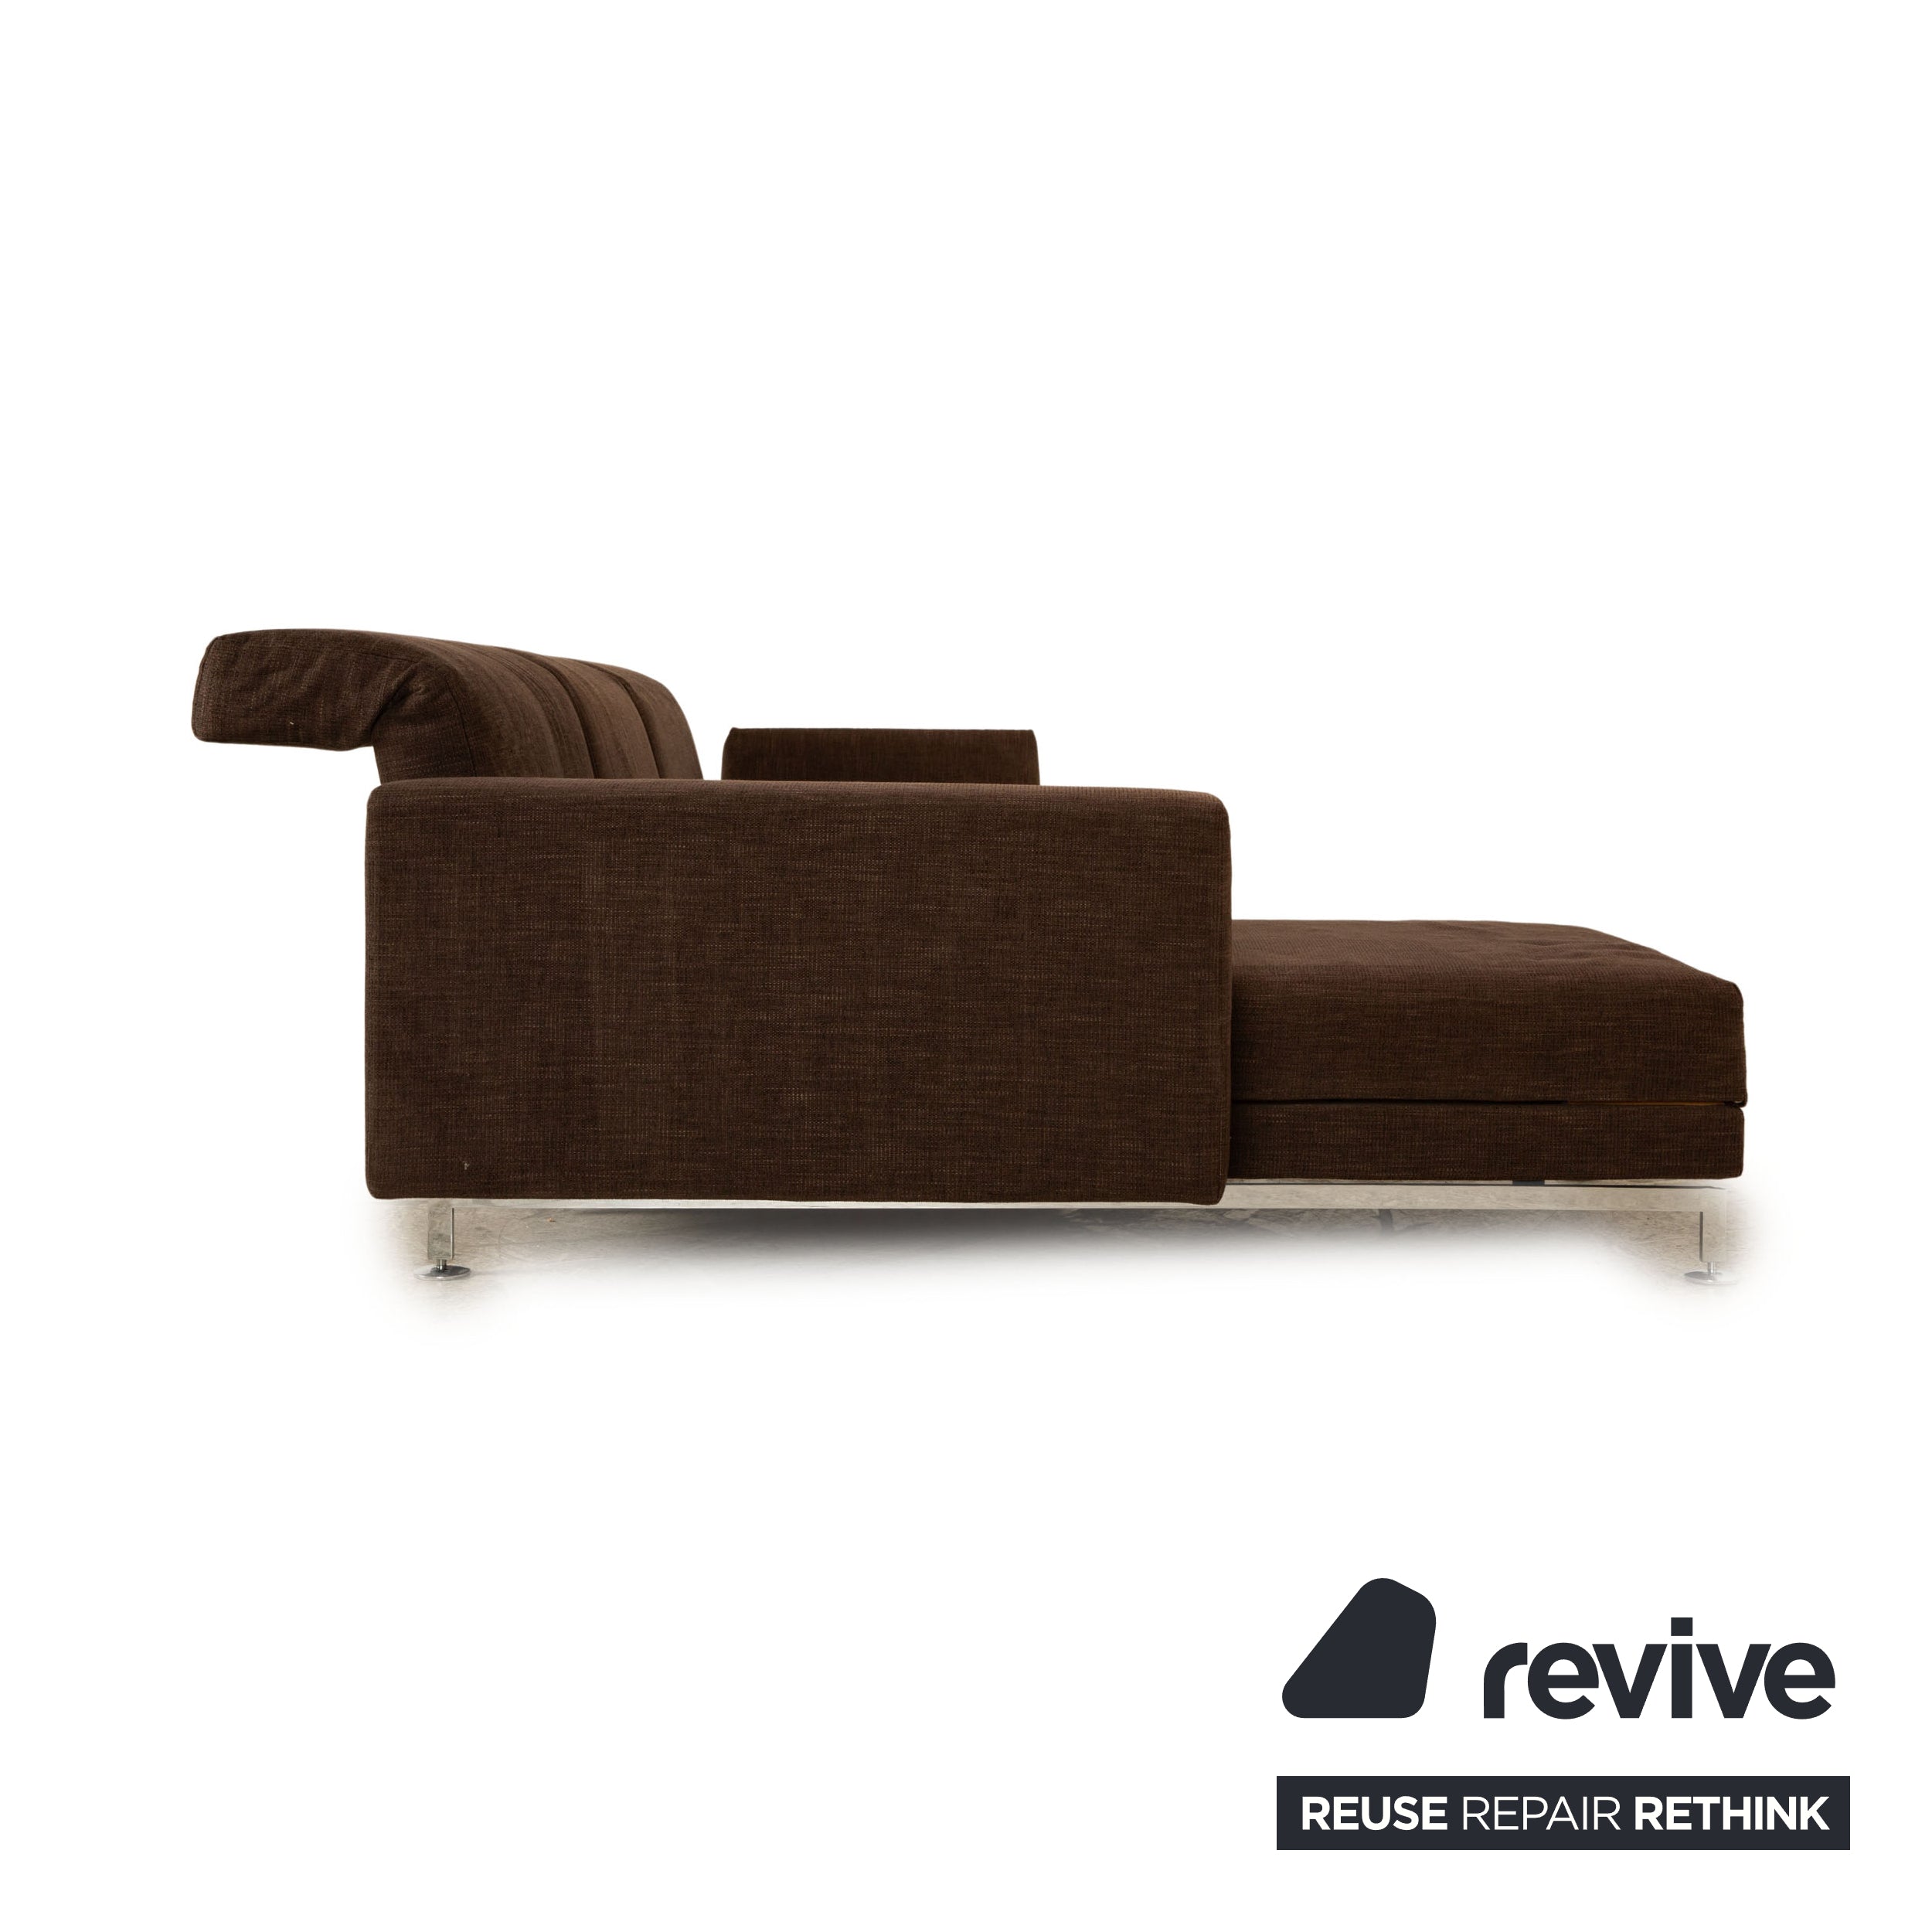 Brühl Moule fabric corner sofa dark brown chaise longue left manual function sofa couch